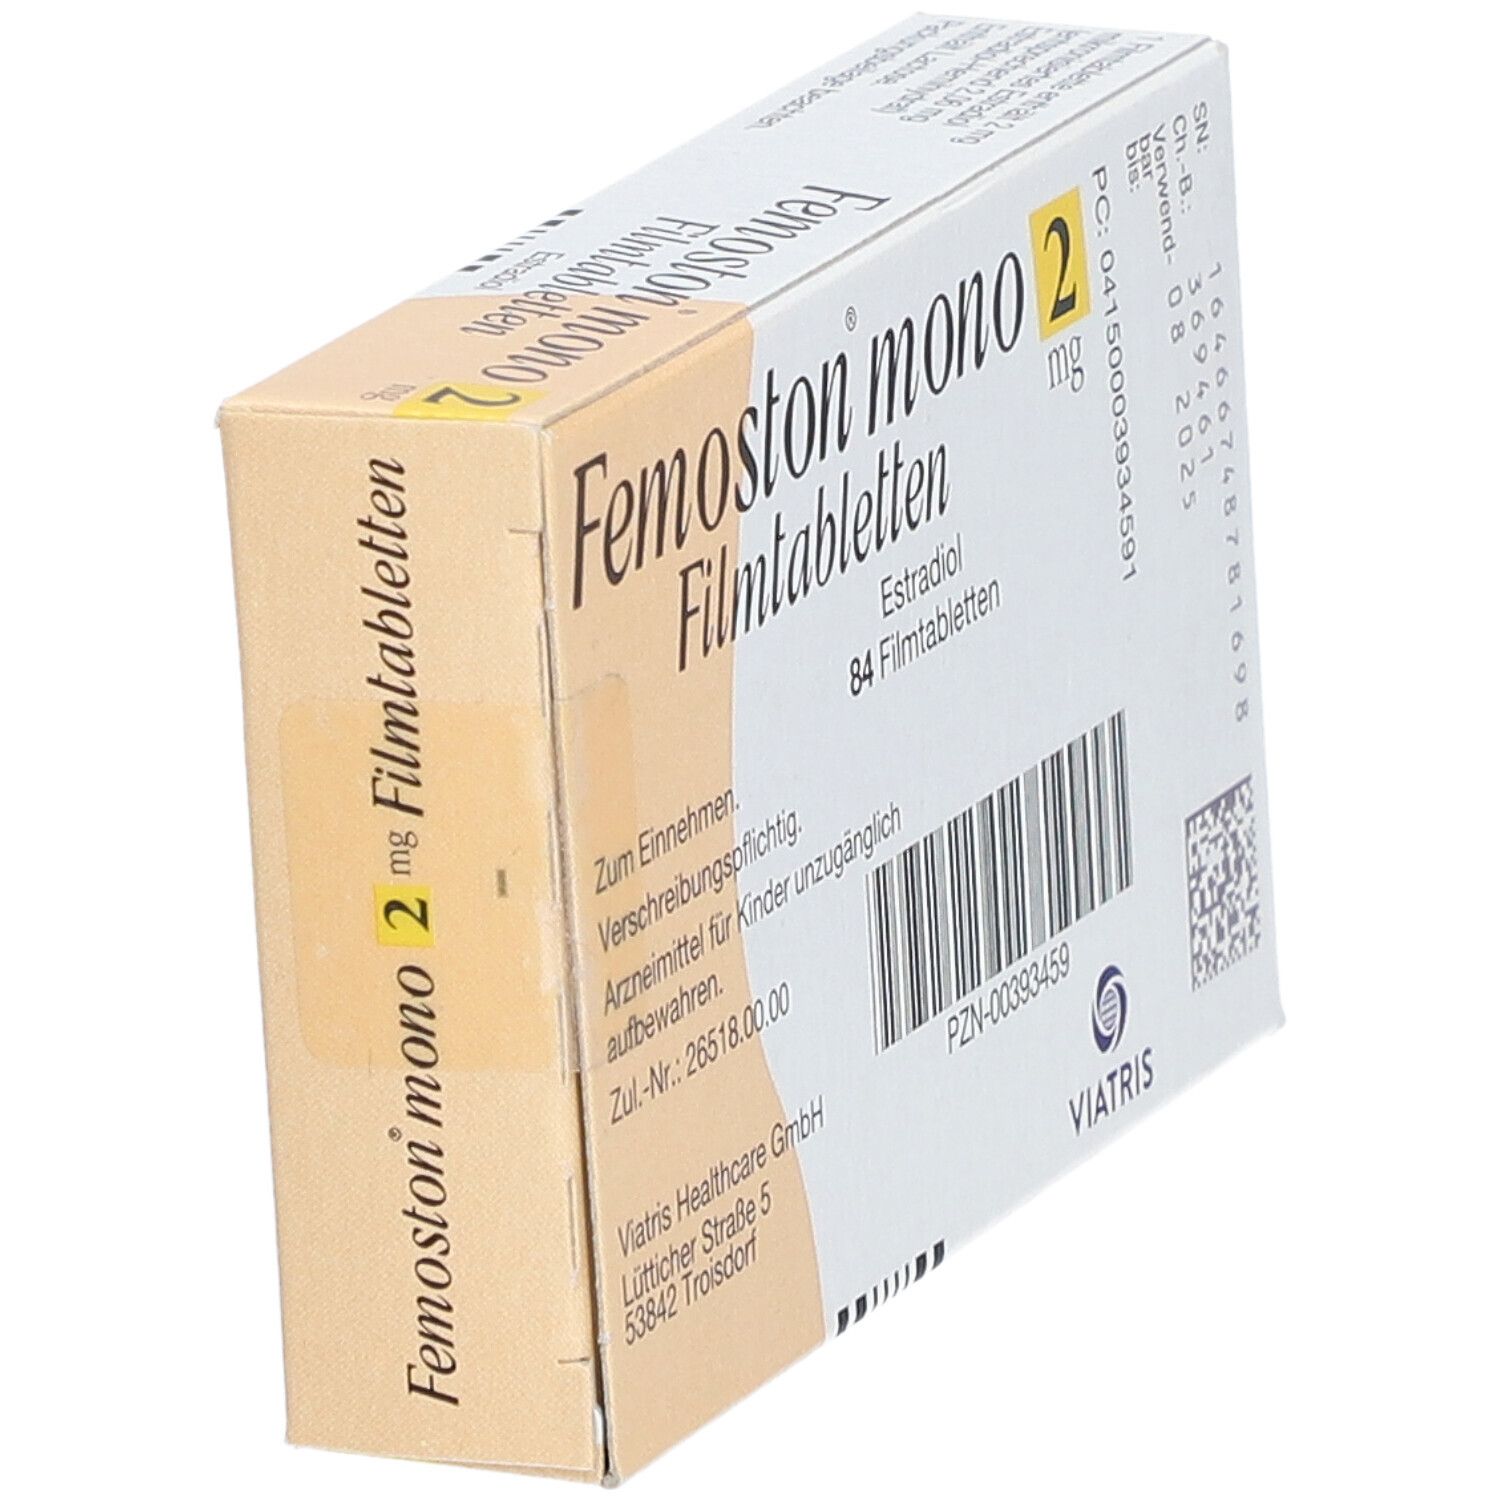 Femoston® mono 2 mg